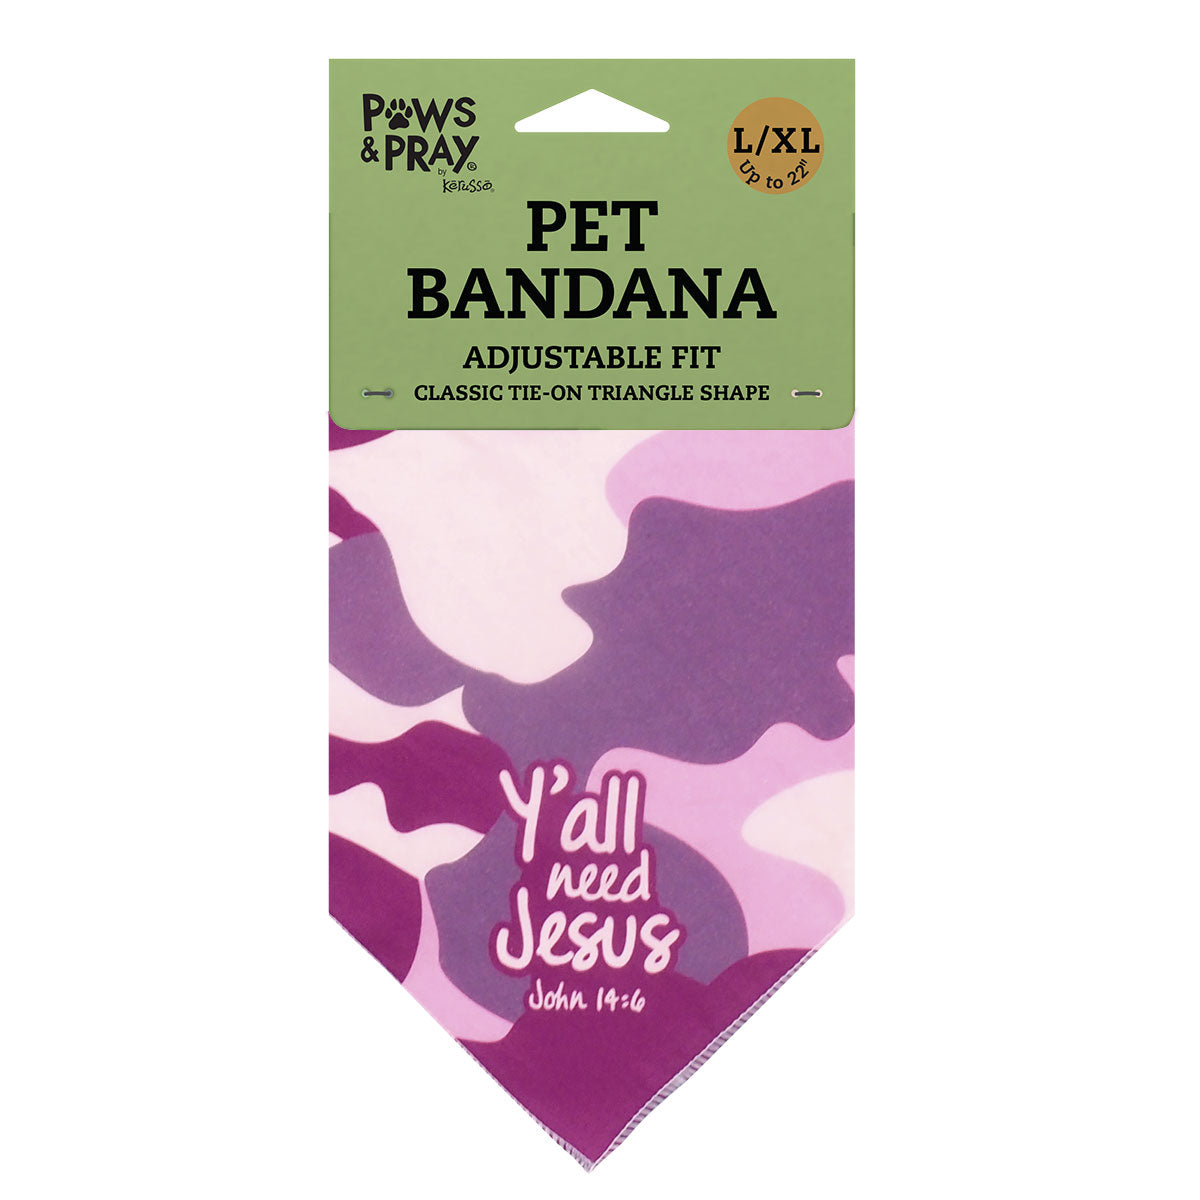 Paws & Pray Y'all Need Jesus Pet Bandana